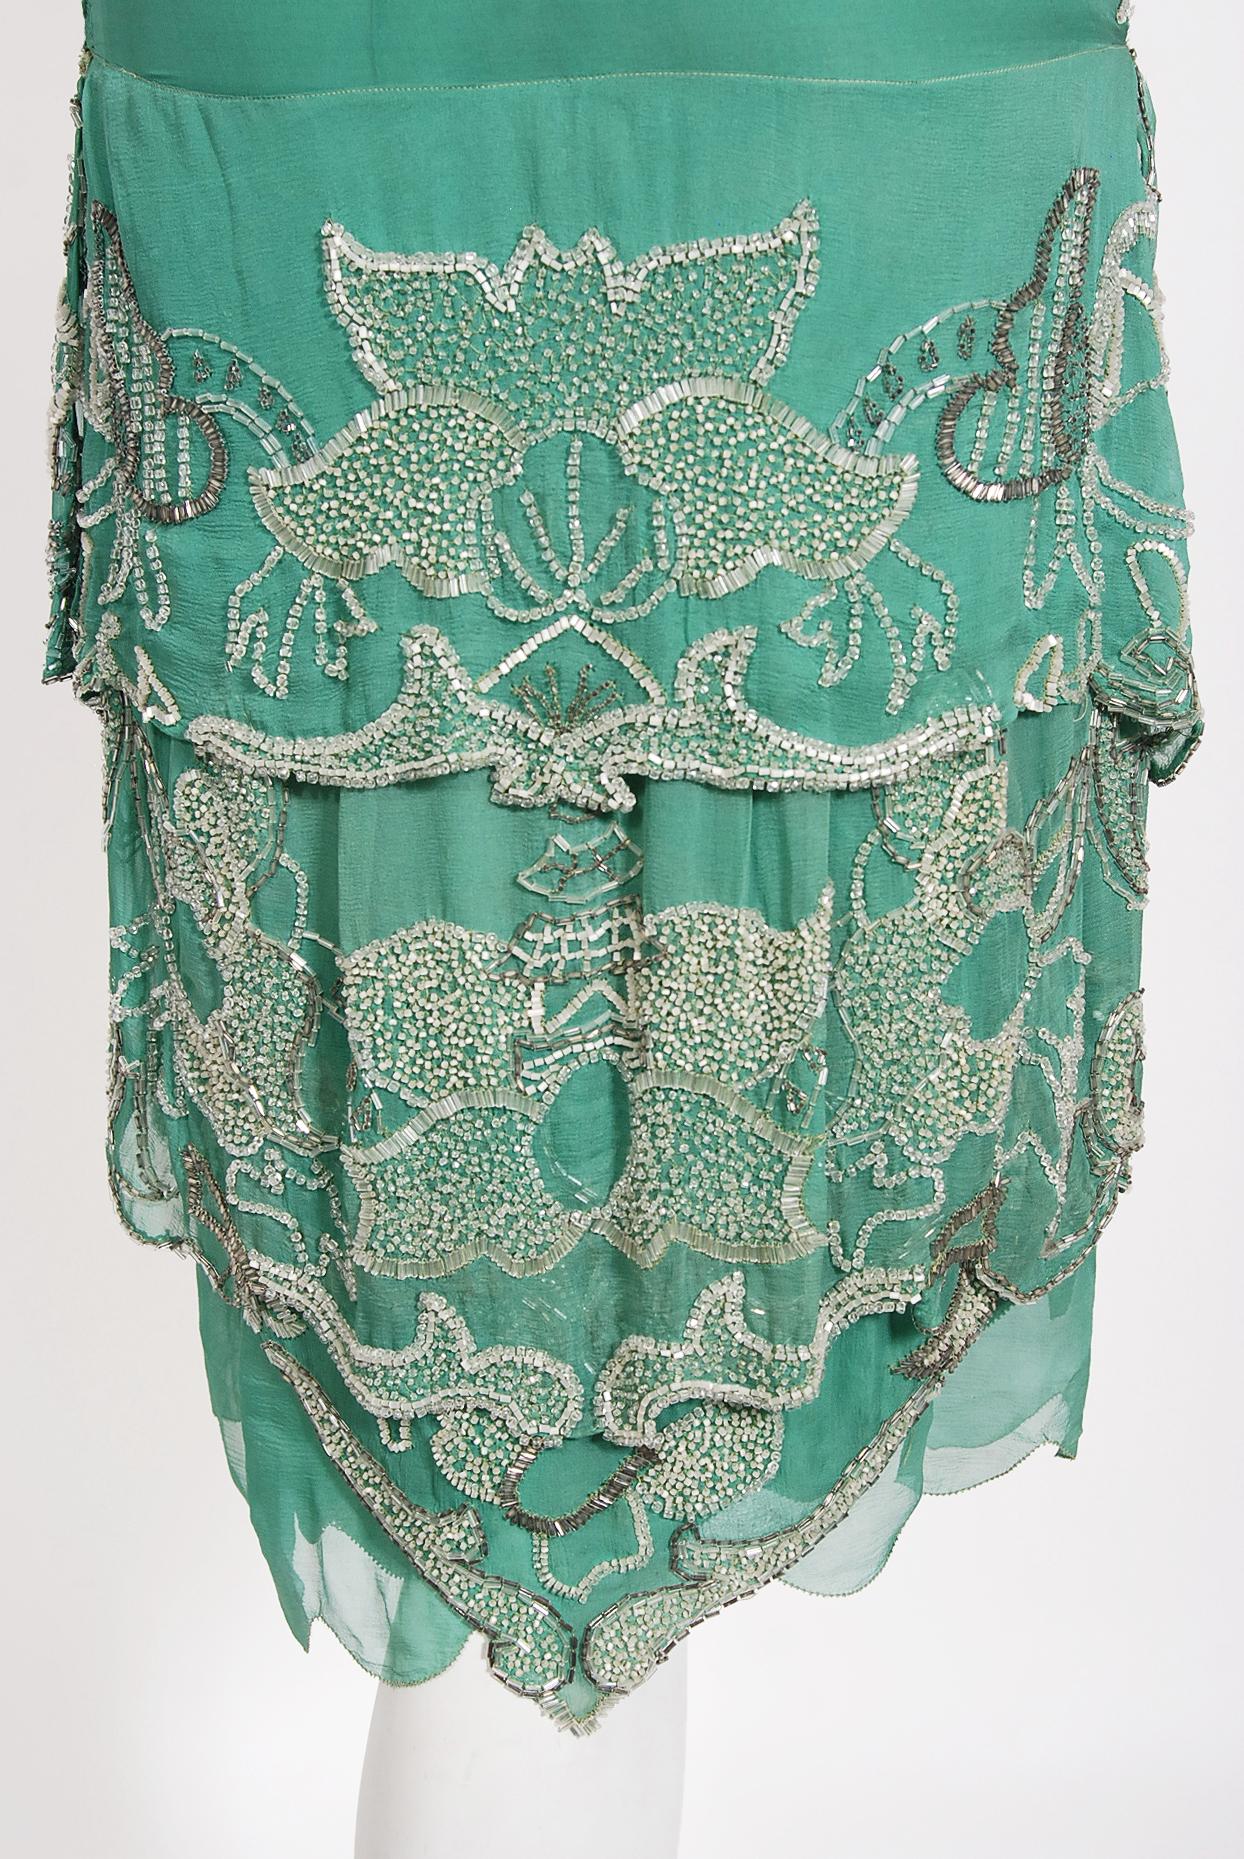 Vintage 1920's Jean Patou Haute Couture Attributed Seafoam Beaded Chiffon Dress  7